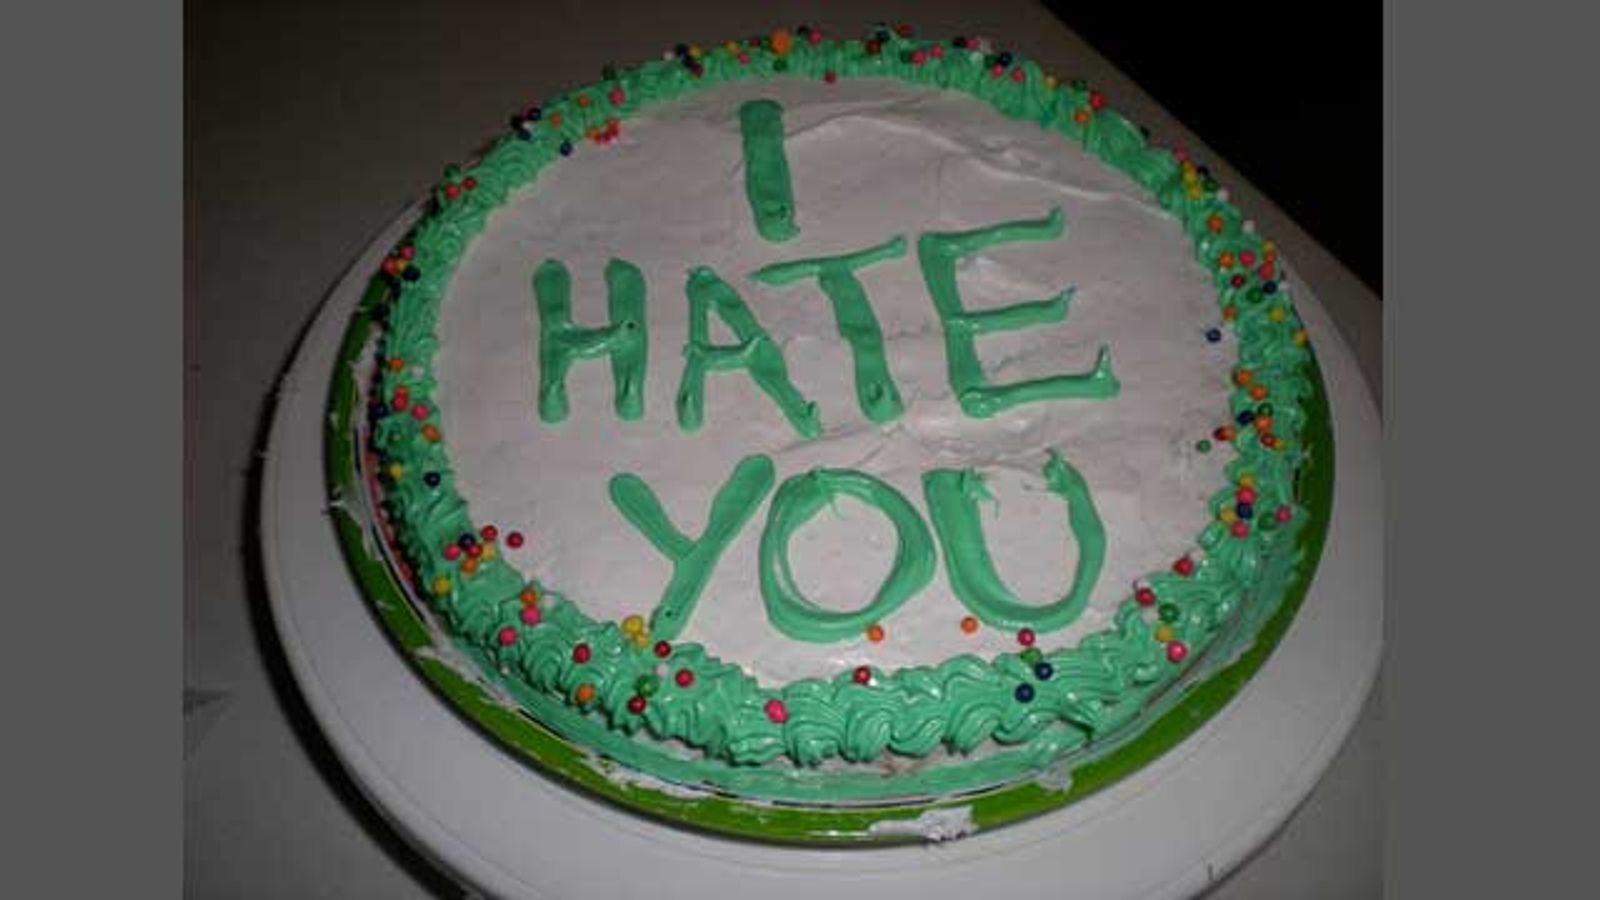 Hate Cake: The New Anti-Gay Meme?